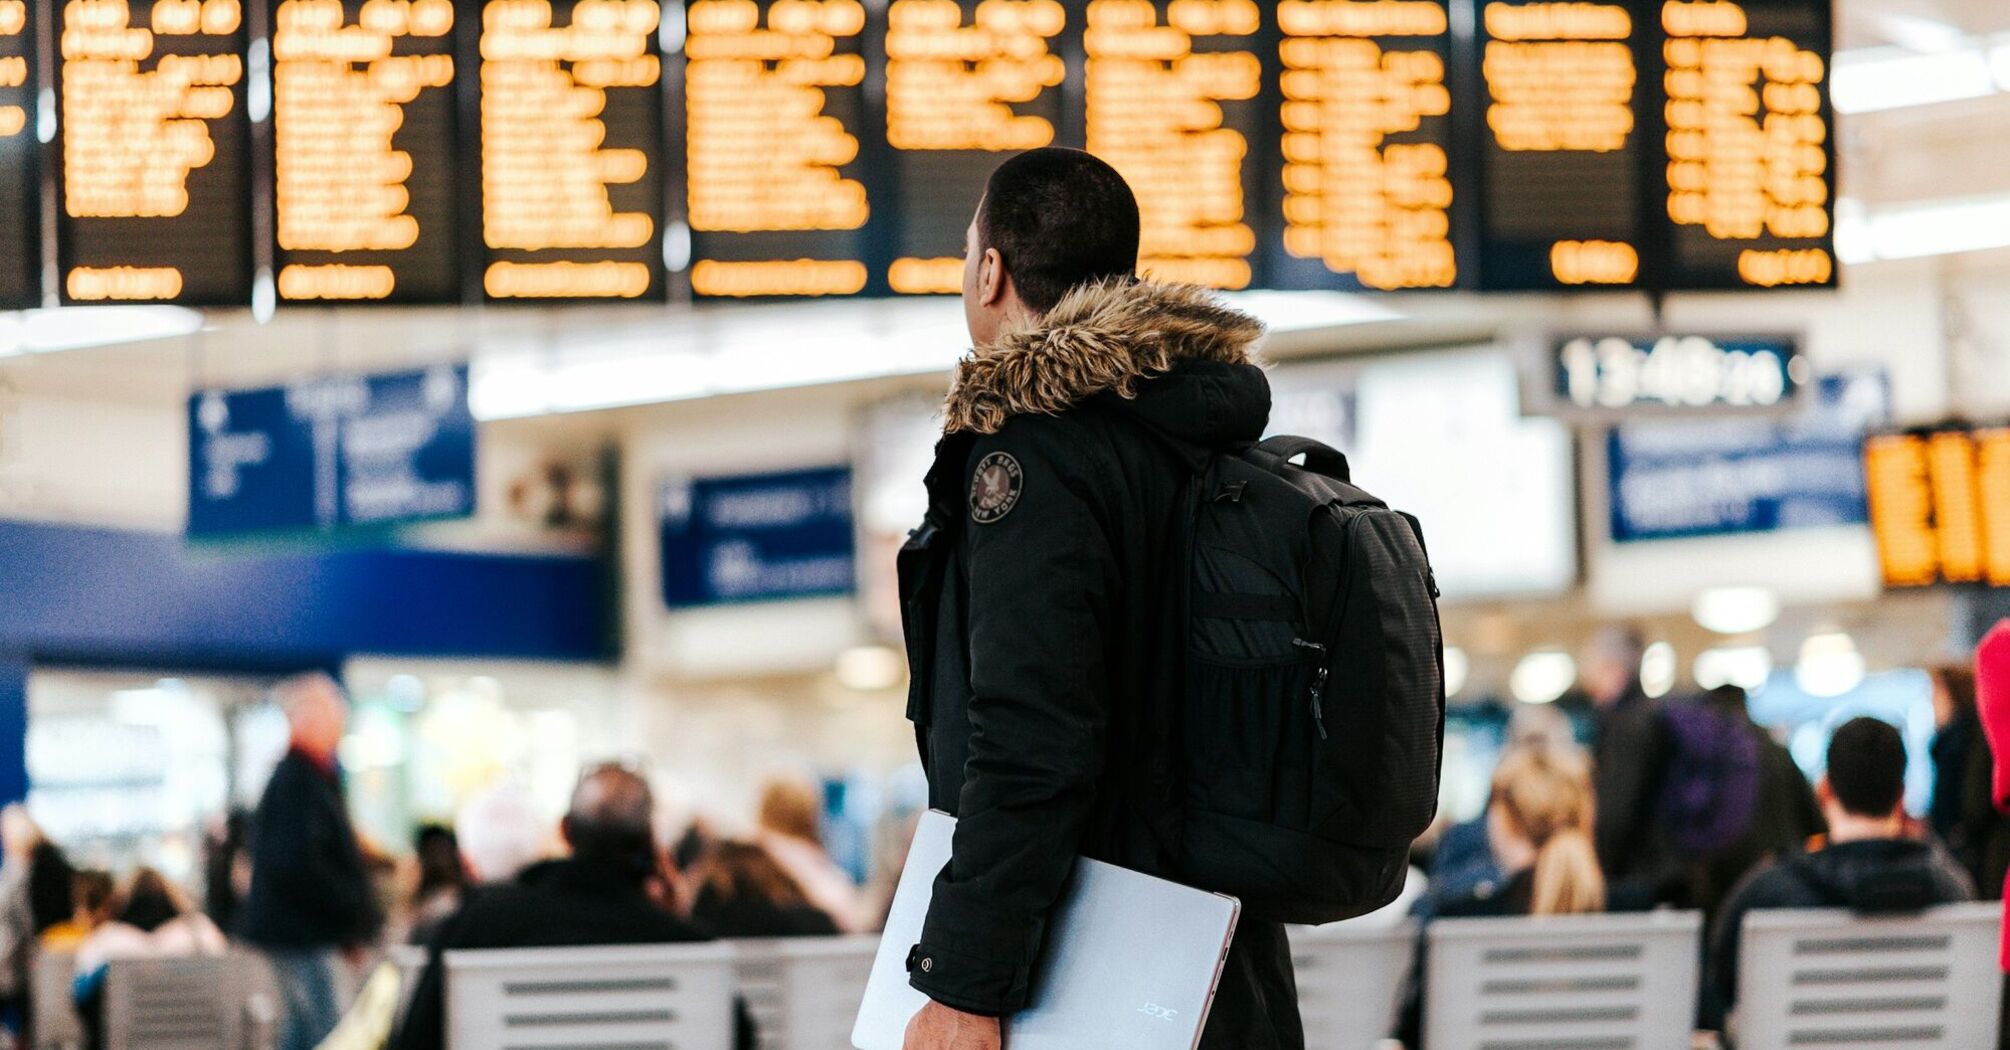 Traveler checking flight schedules at airport departure board